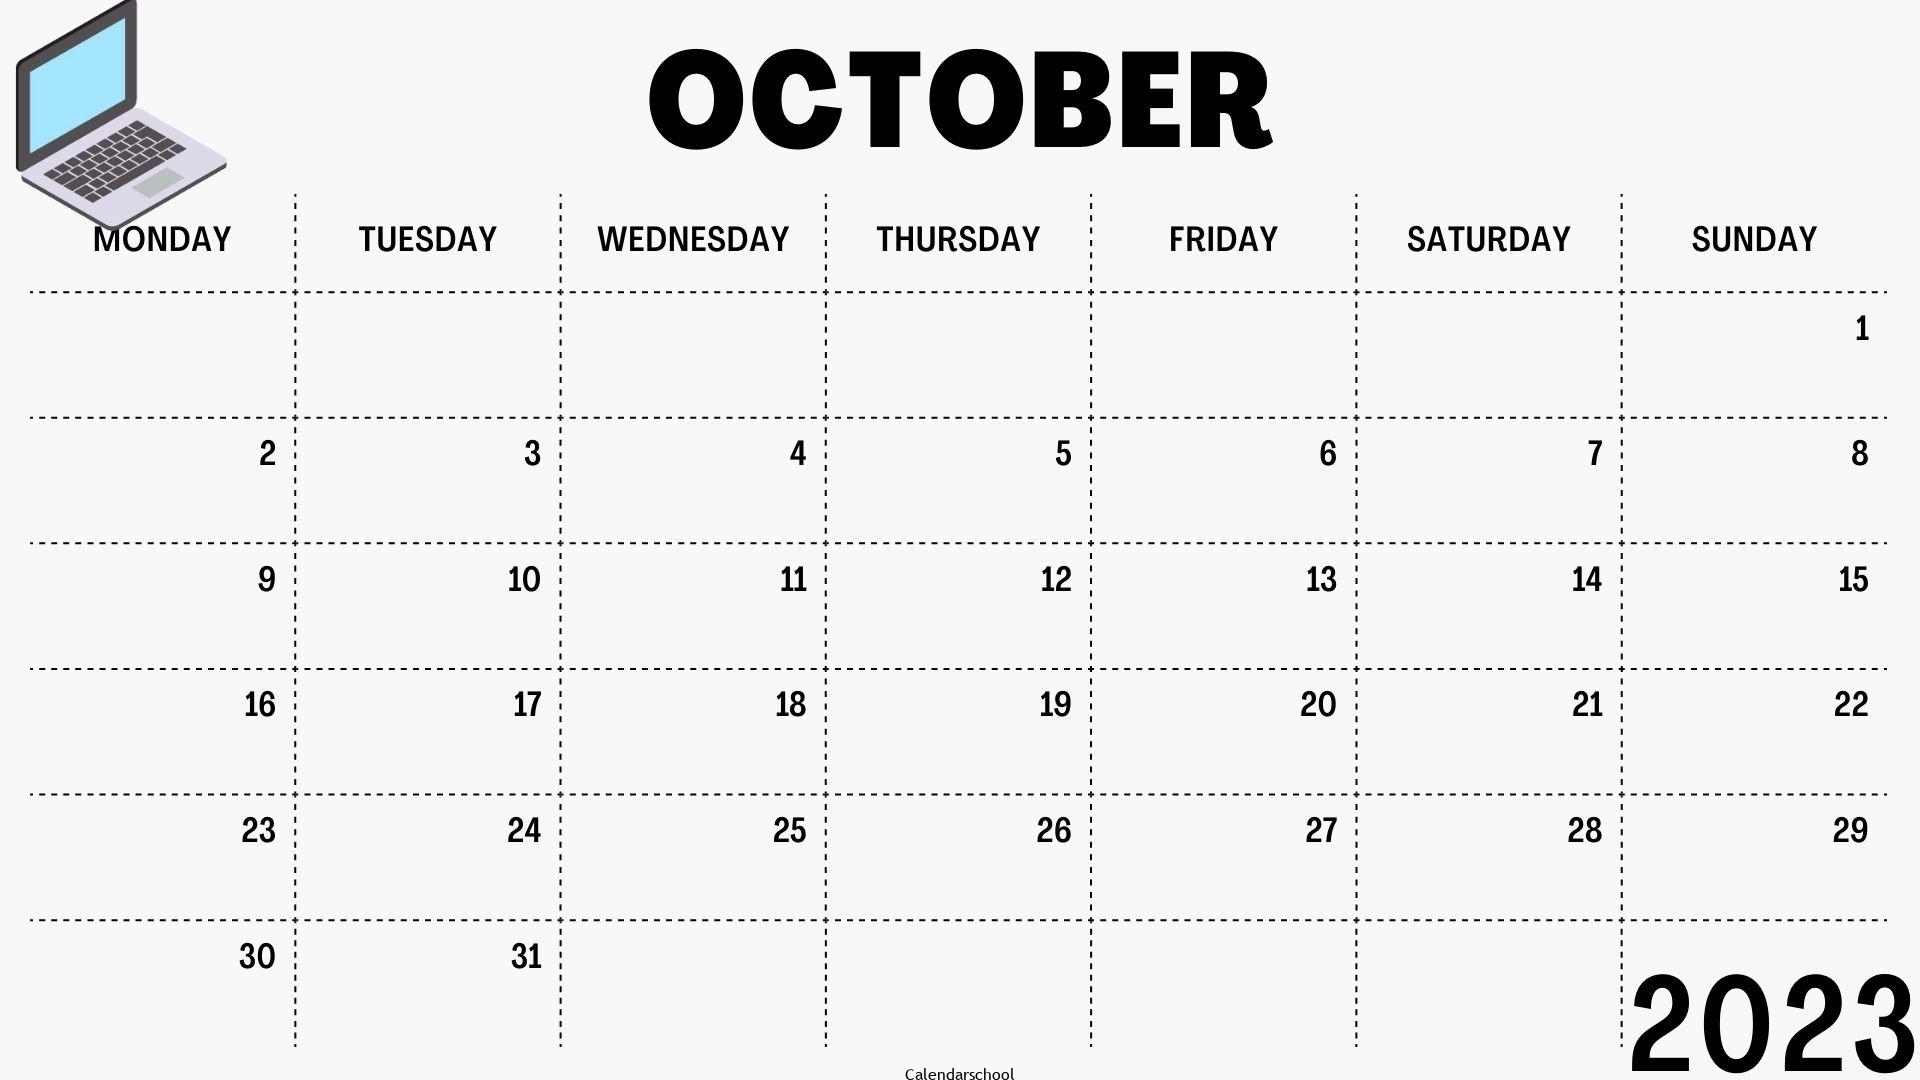 October 2023 Moon Calendar